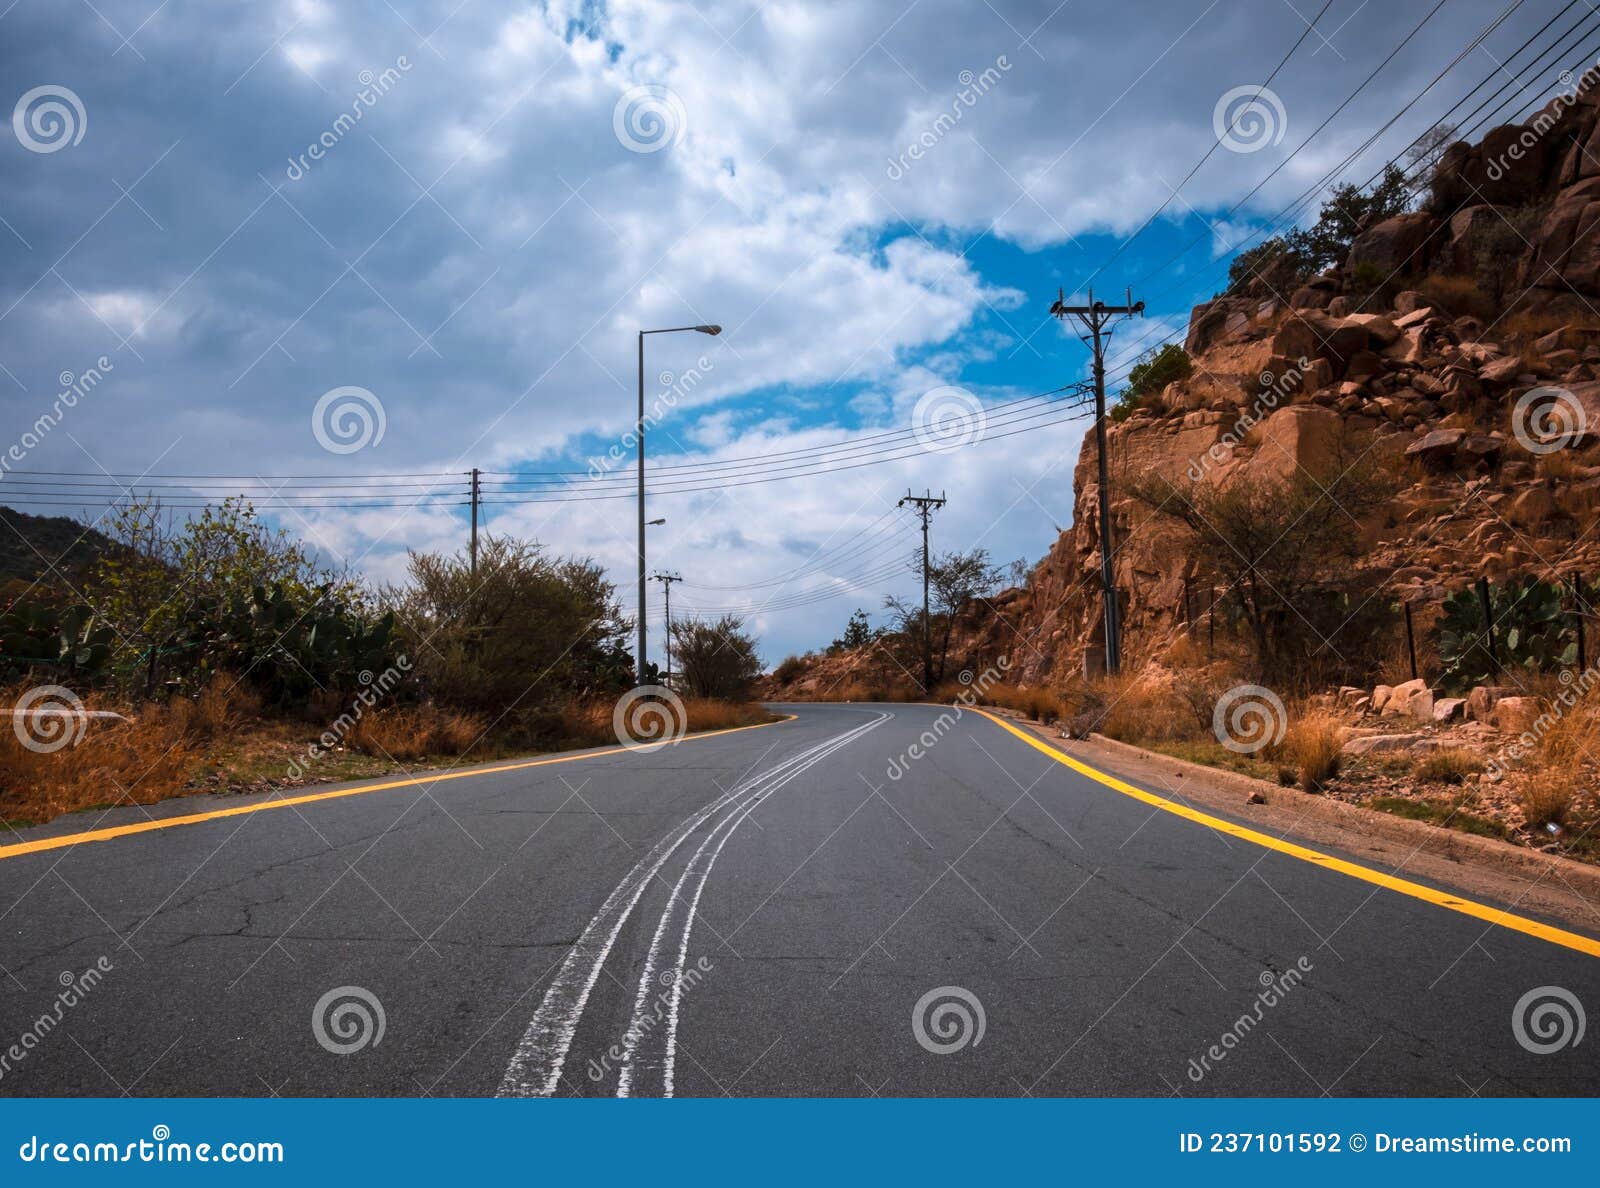 road - al hada mountain